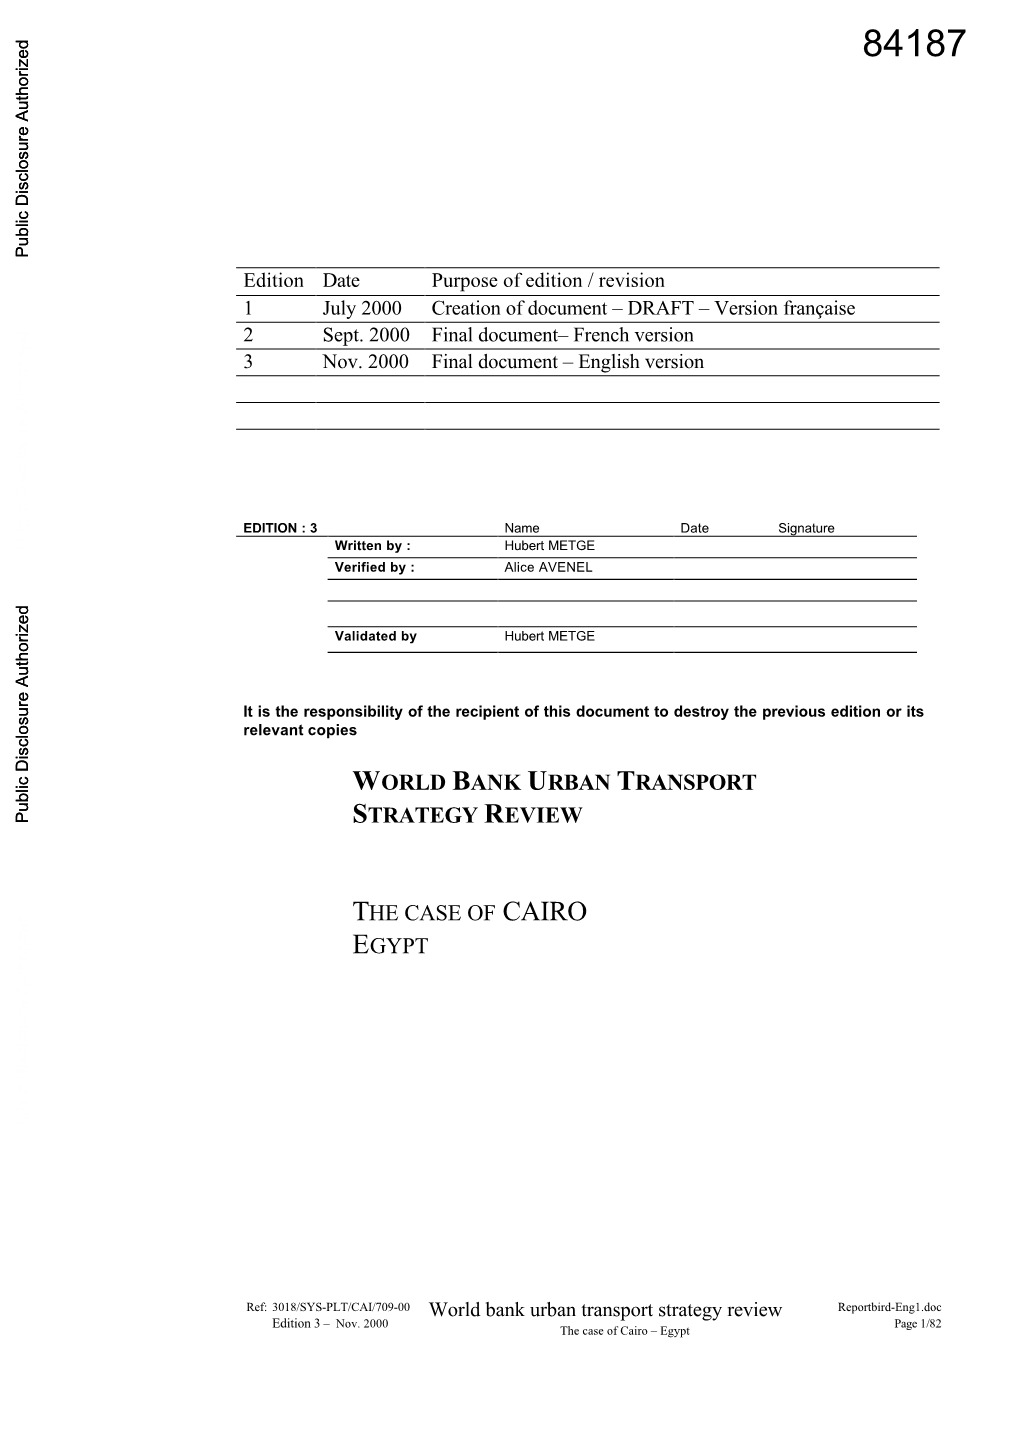 World Bank Urban Transport Strategy Review Reportbird-Eng1.Doc Edition 3 – Nov